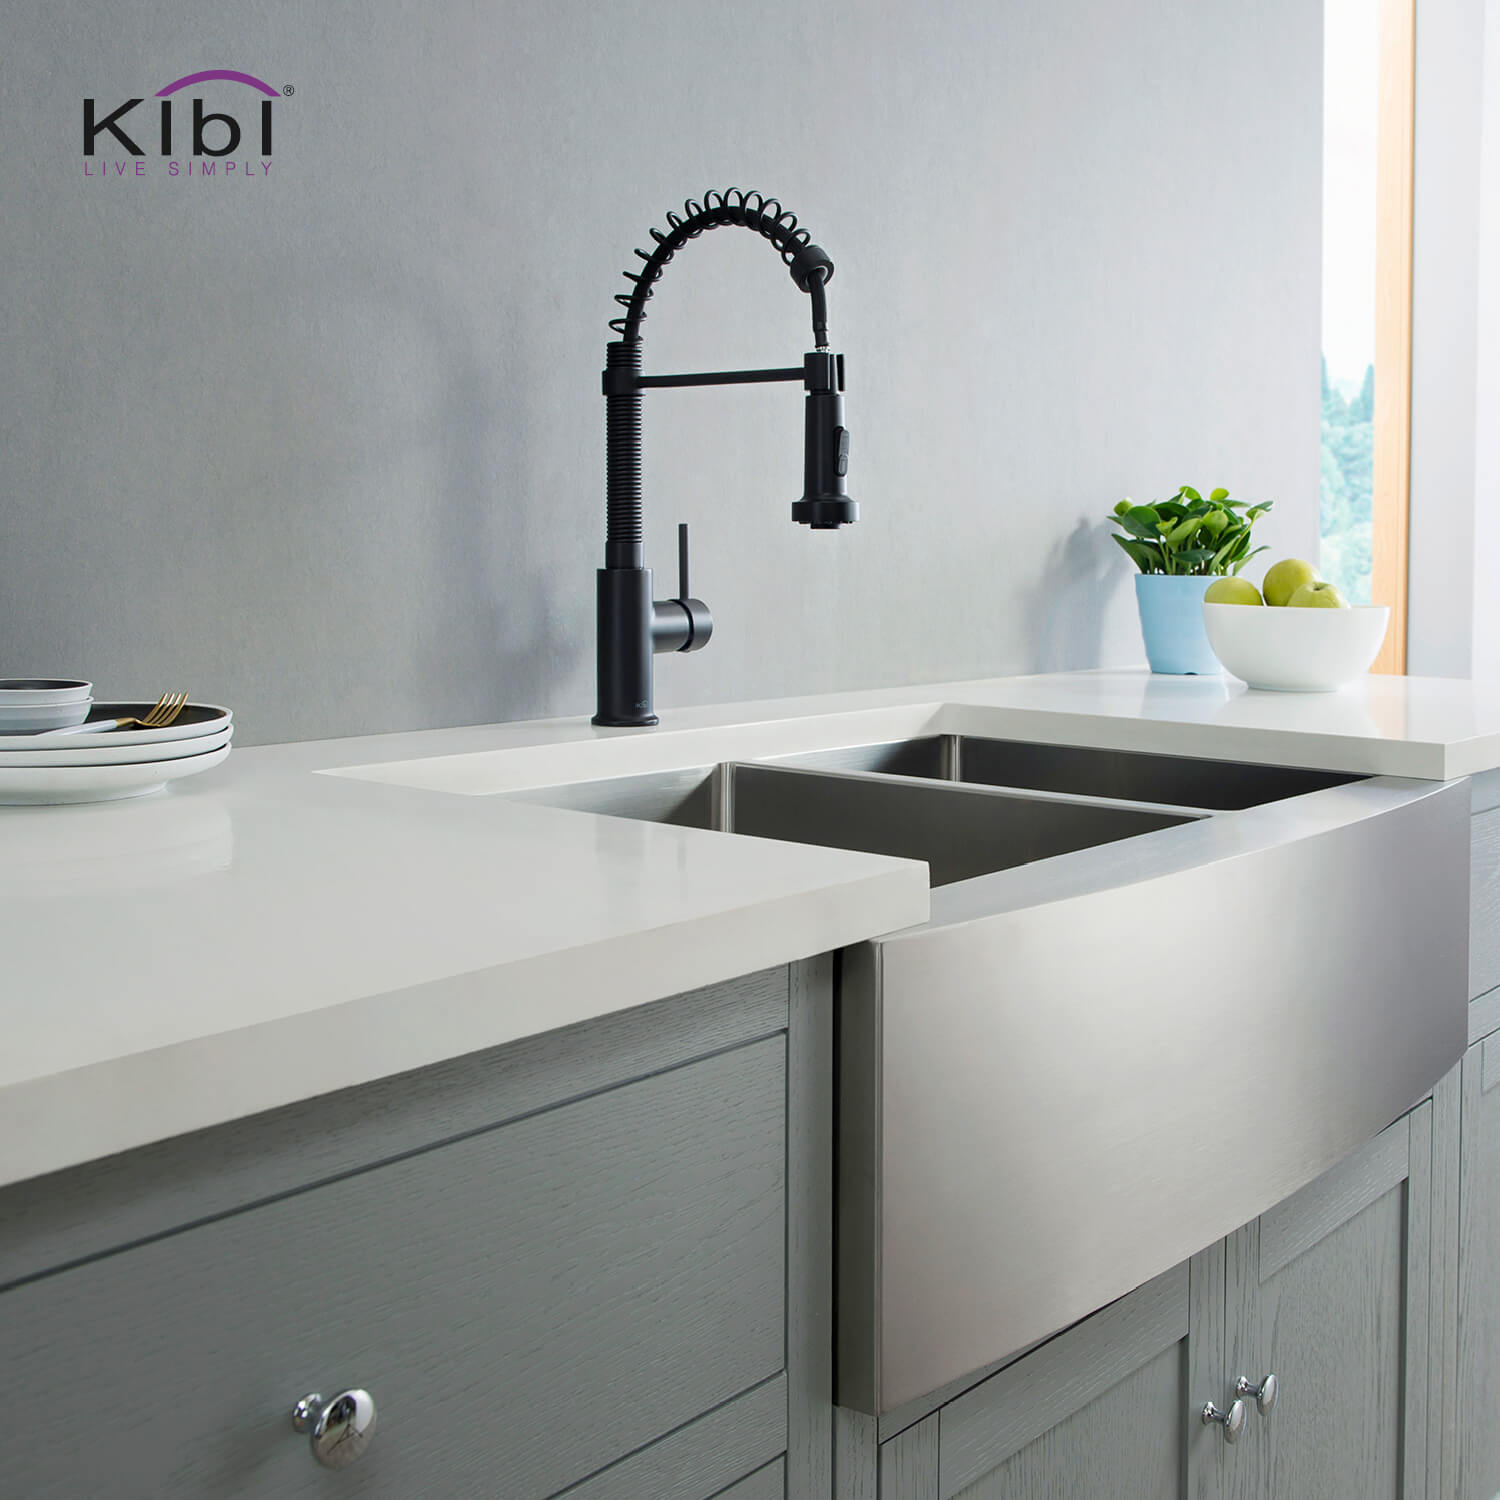 Kibi Aurora Single Handle High Arc Pull Down Kitchen Faucet In Matte Black Finish